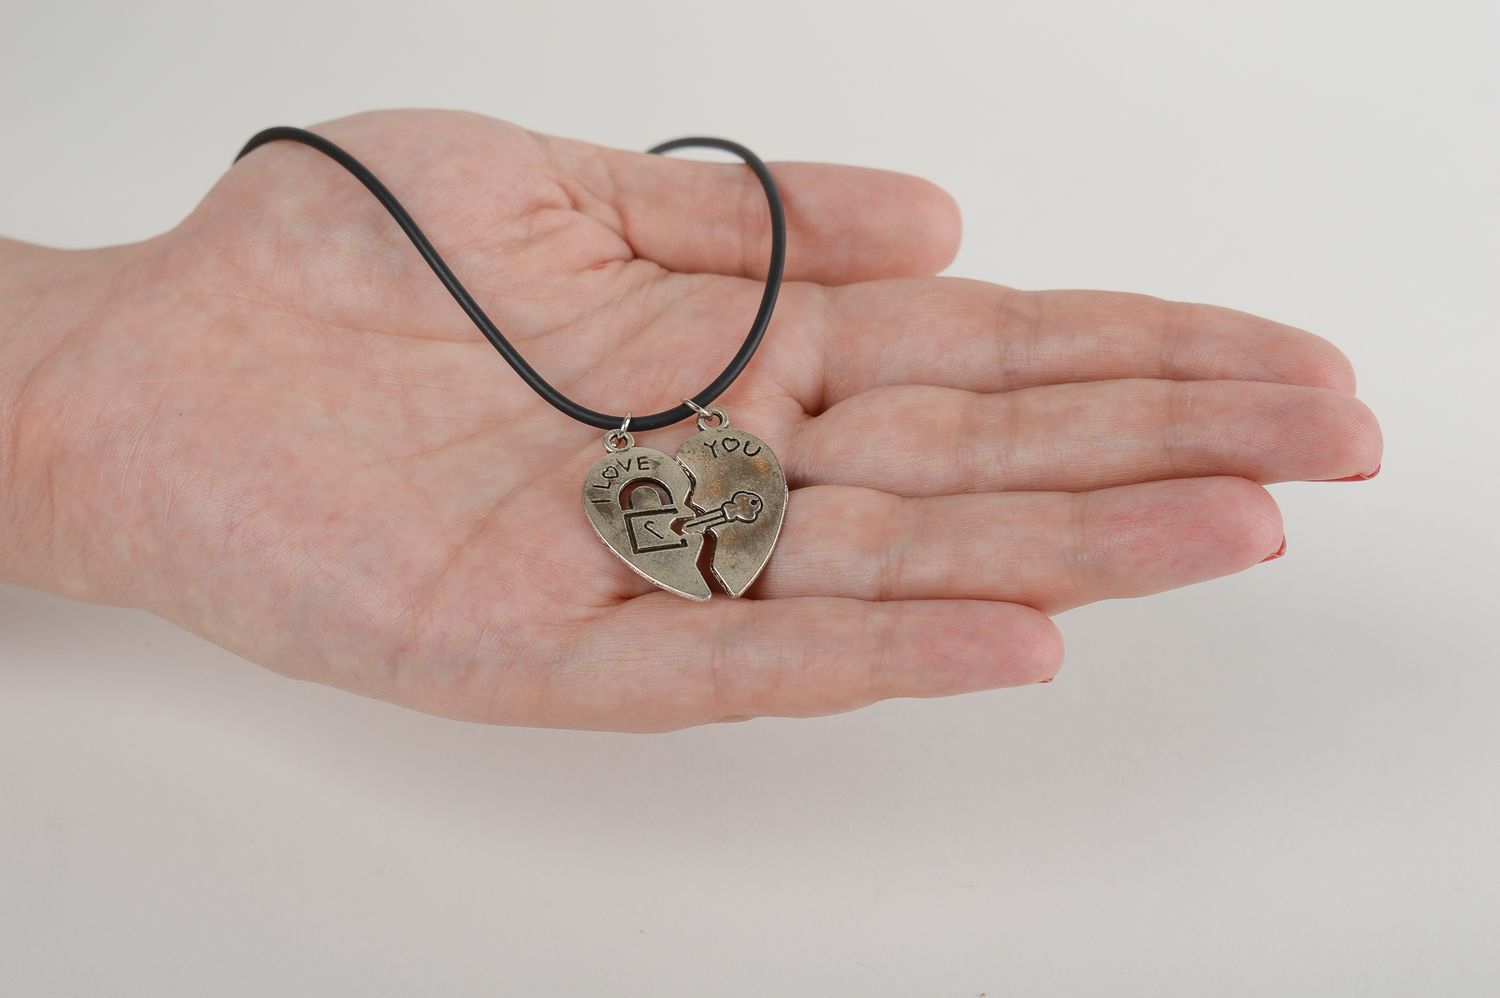 Fashion jewelry handmade pendant metal pendant heart with a cord women gift photo 5